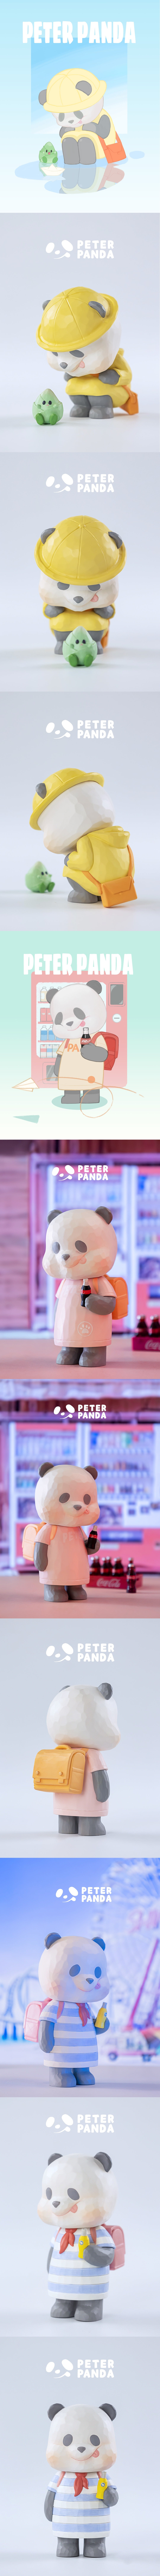 MoeDouble Peter Panda Bamboo Shoot / Cola /  Lemonade / TV Time Collectible Figurine